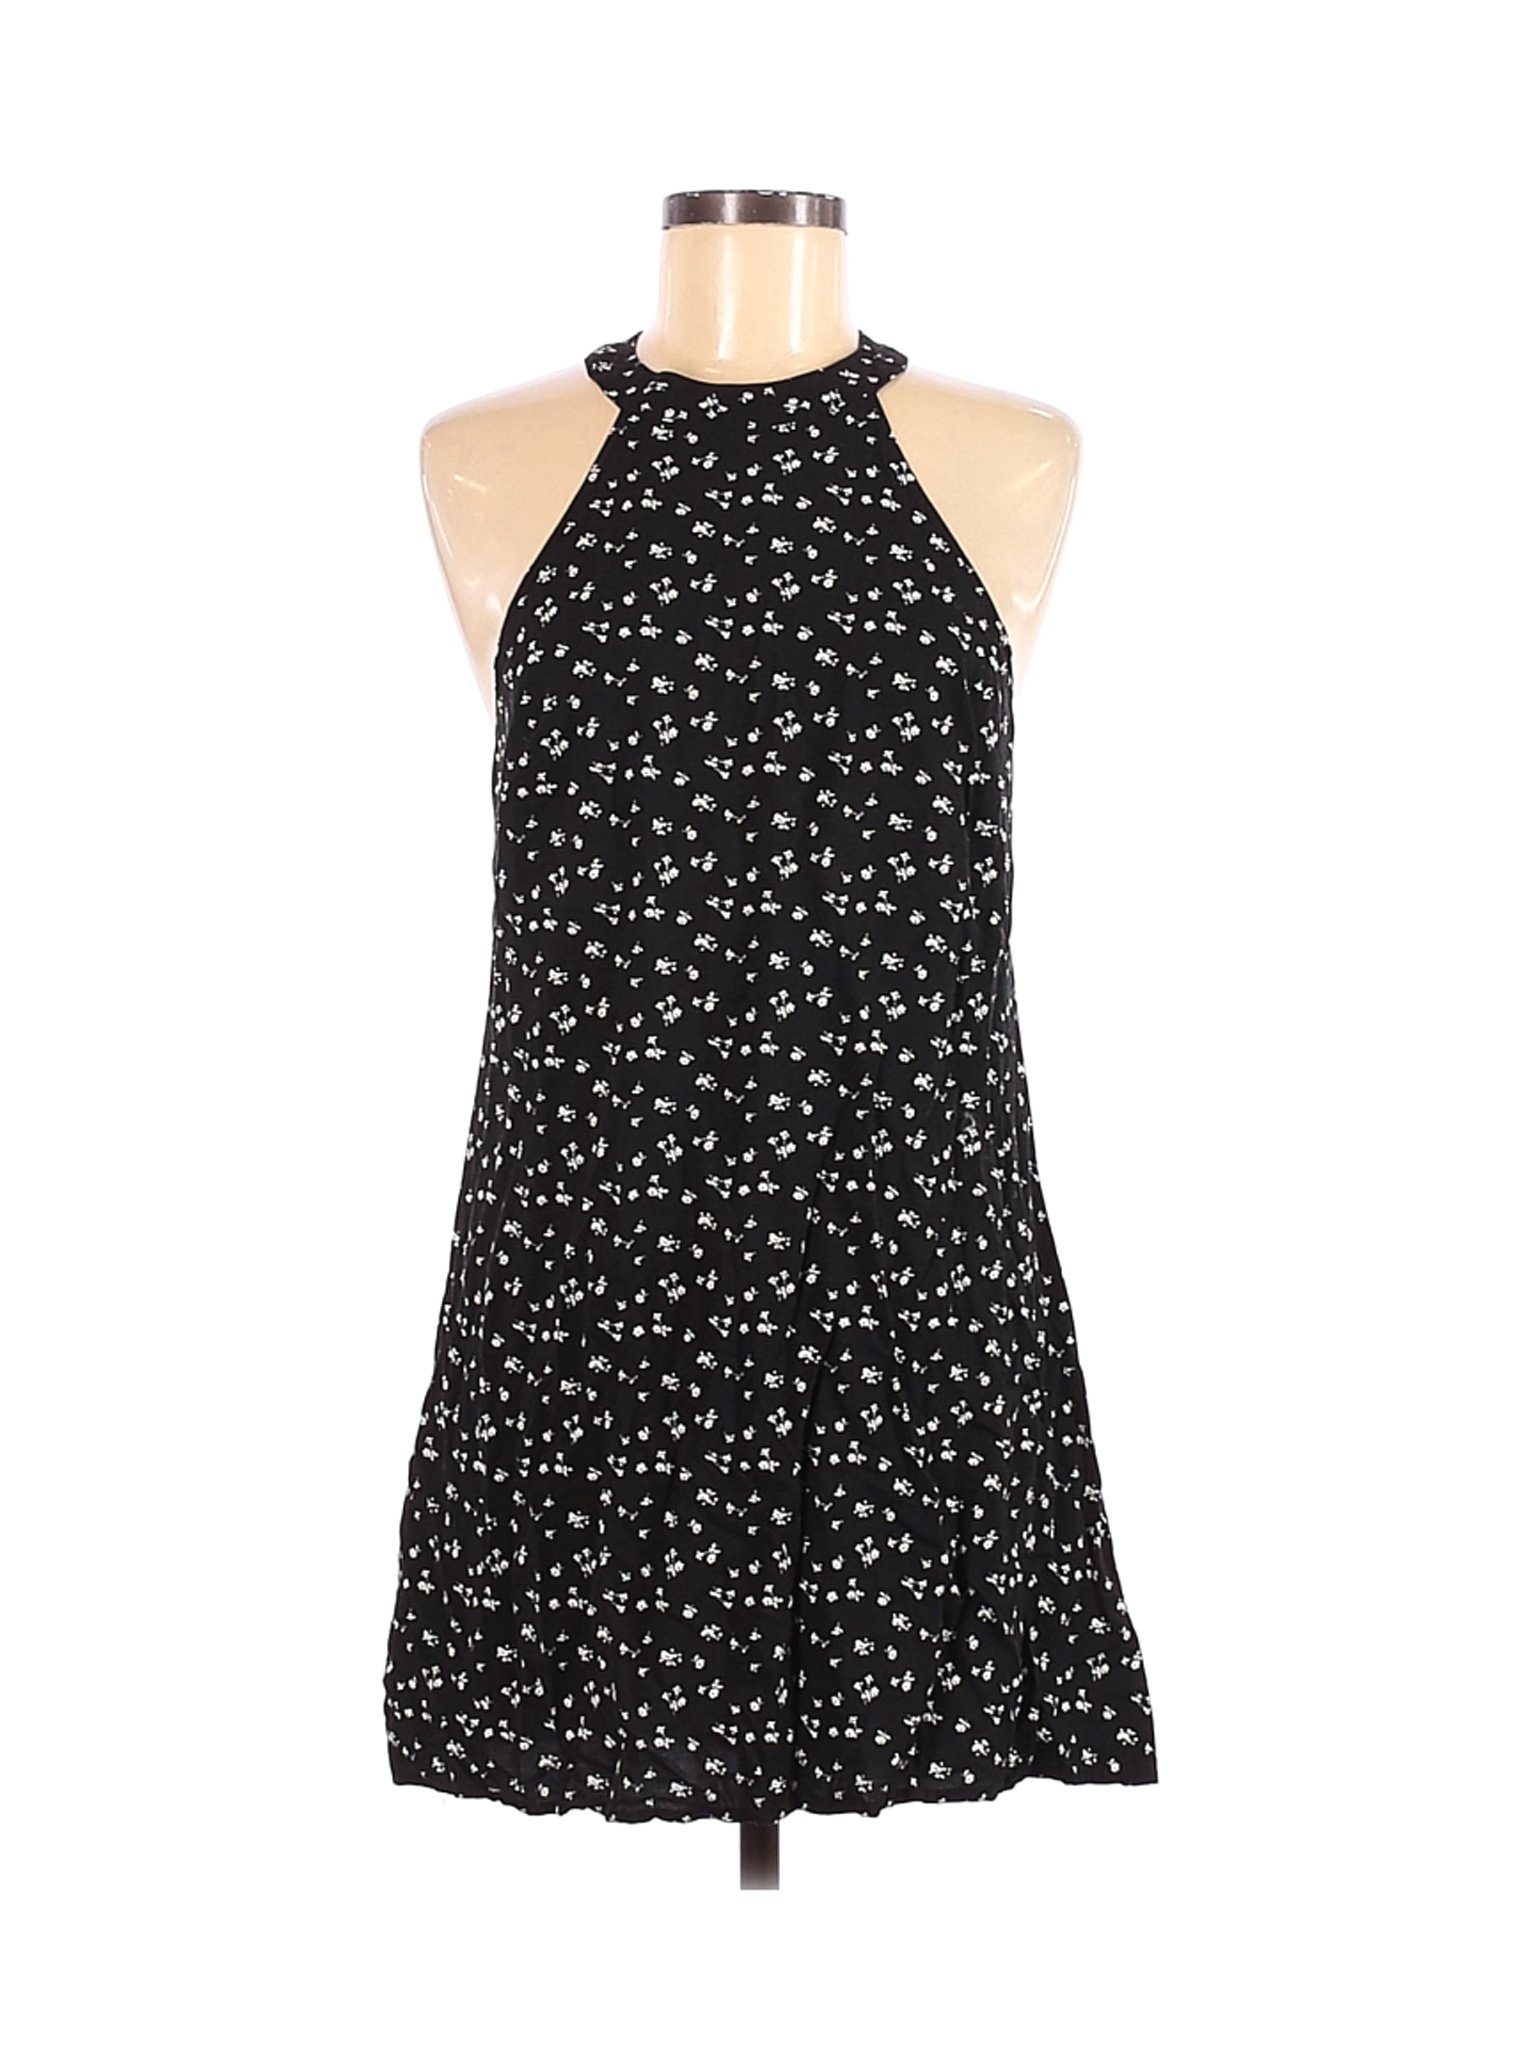 Cope Women Black Casual Dress M | eBay